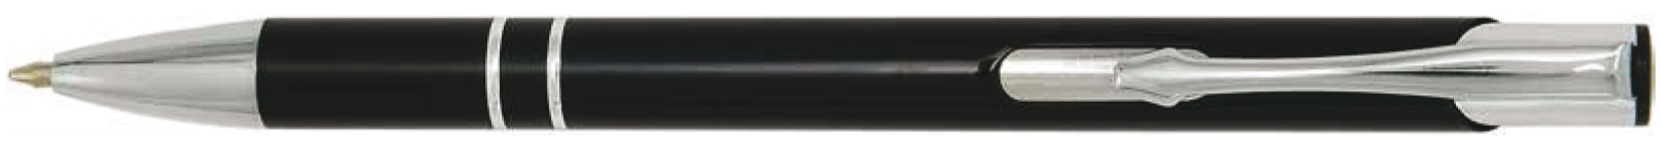 BestPen - metal promotional pen with engraving C-01